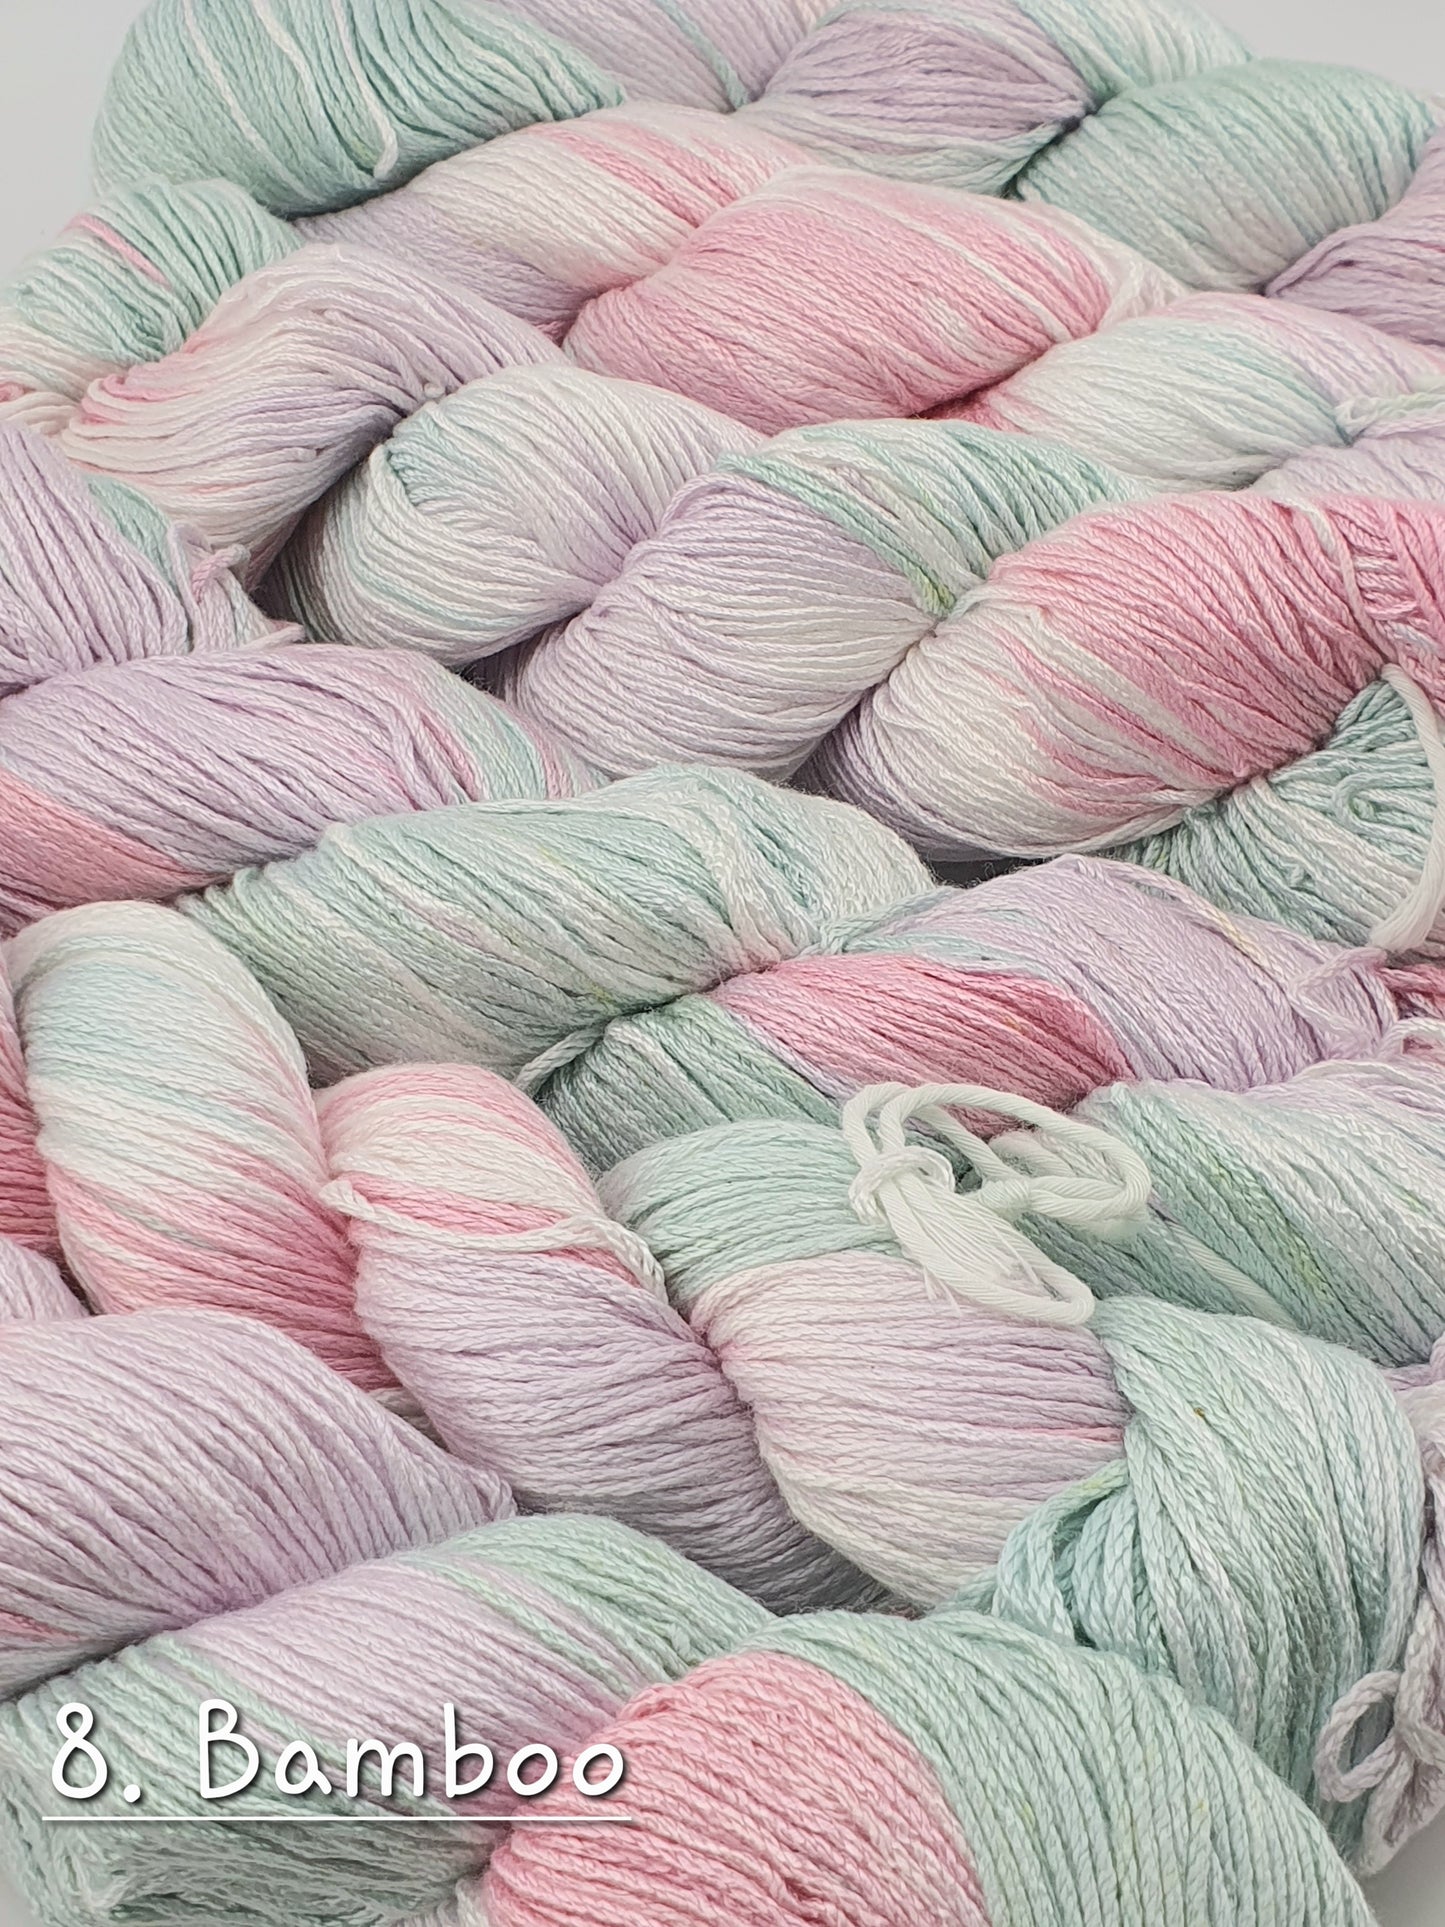 Hand Dye yarn Cotton and Mix Fiber